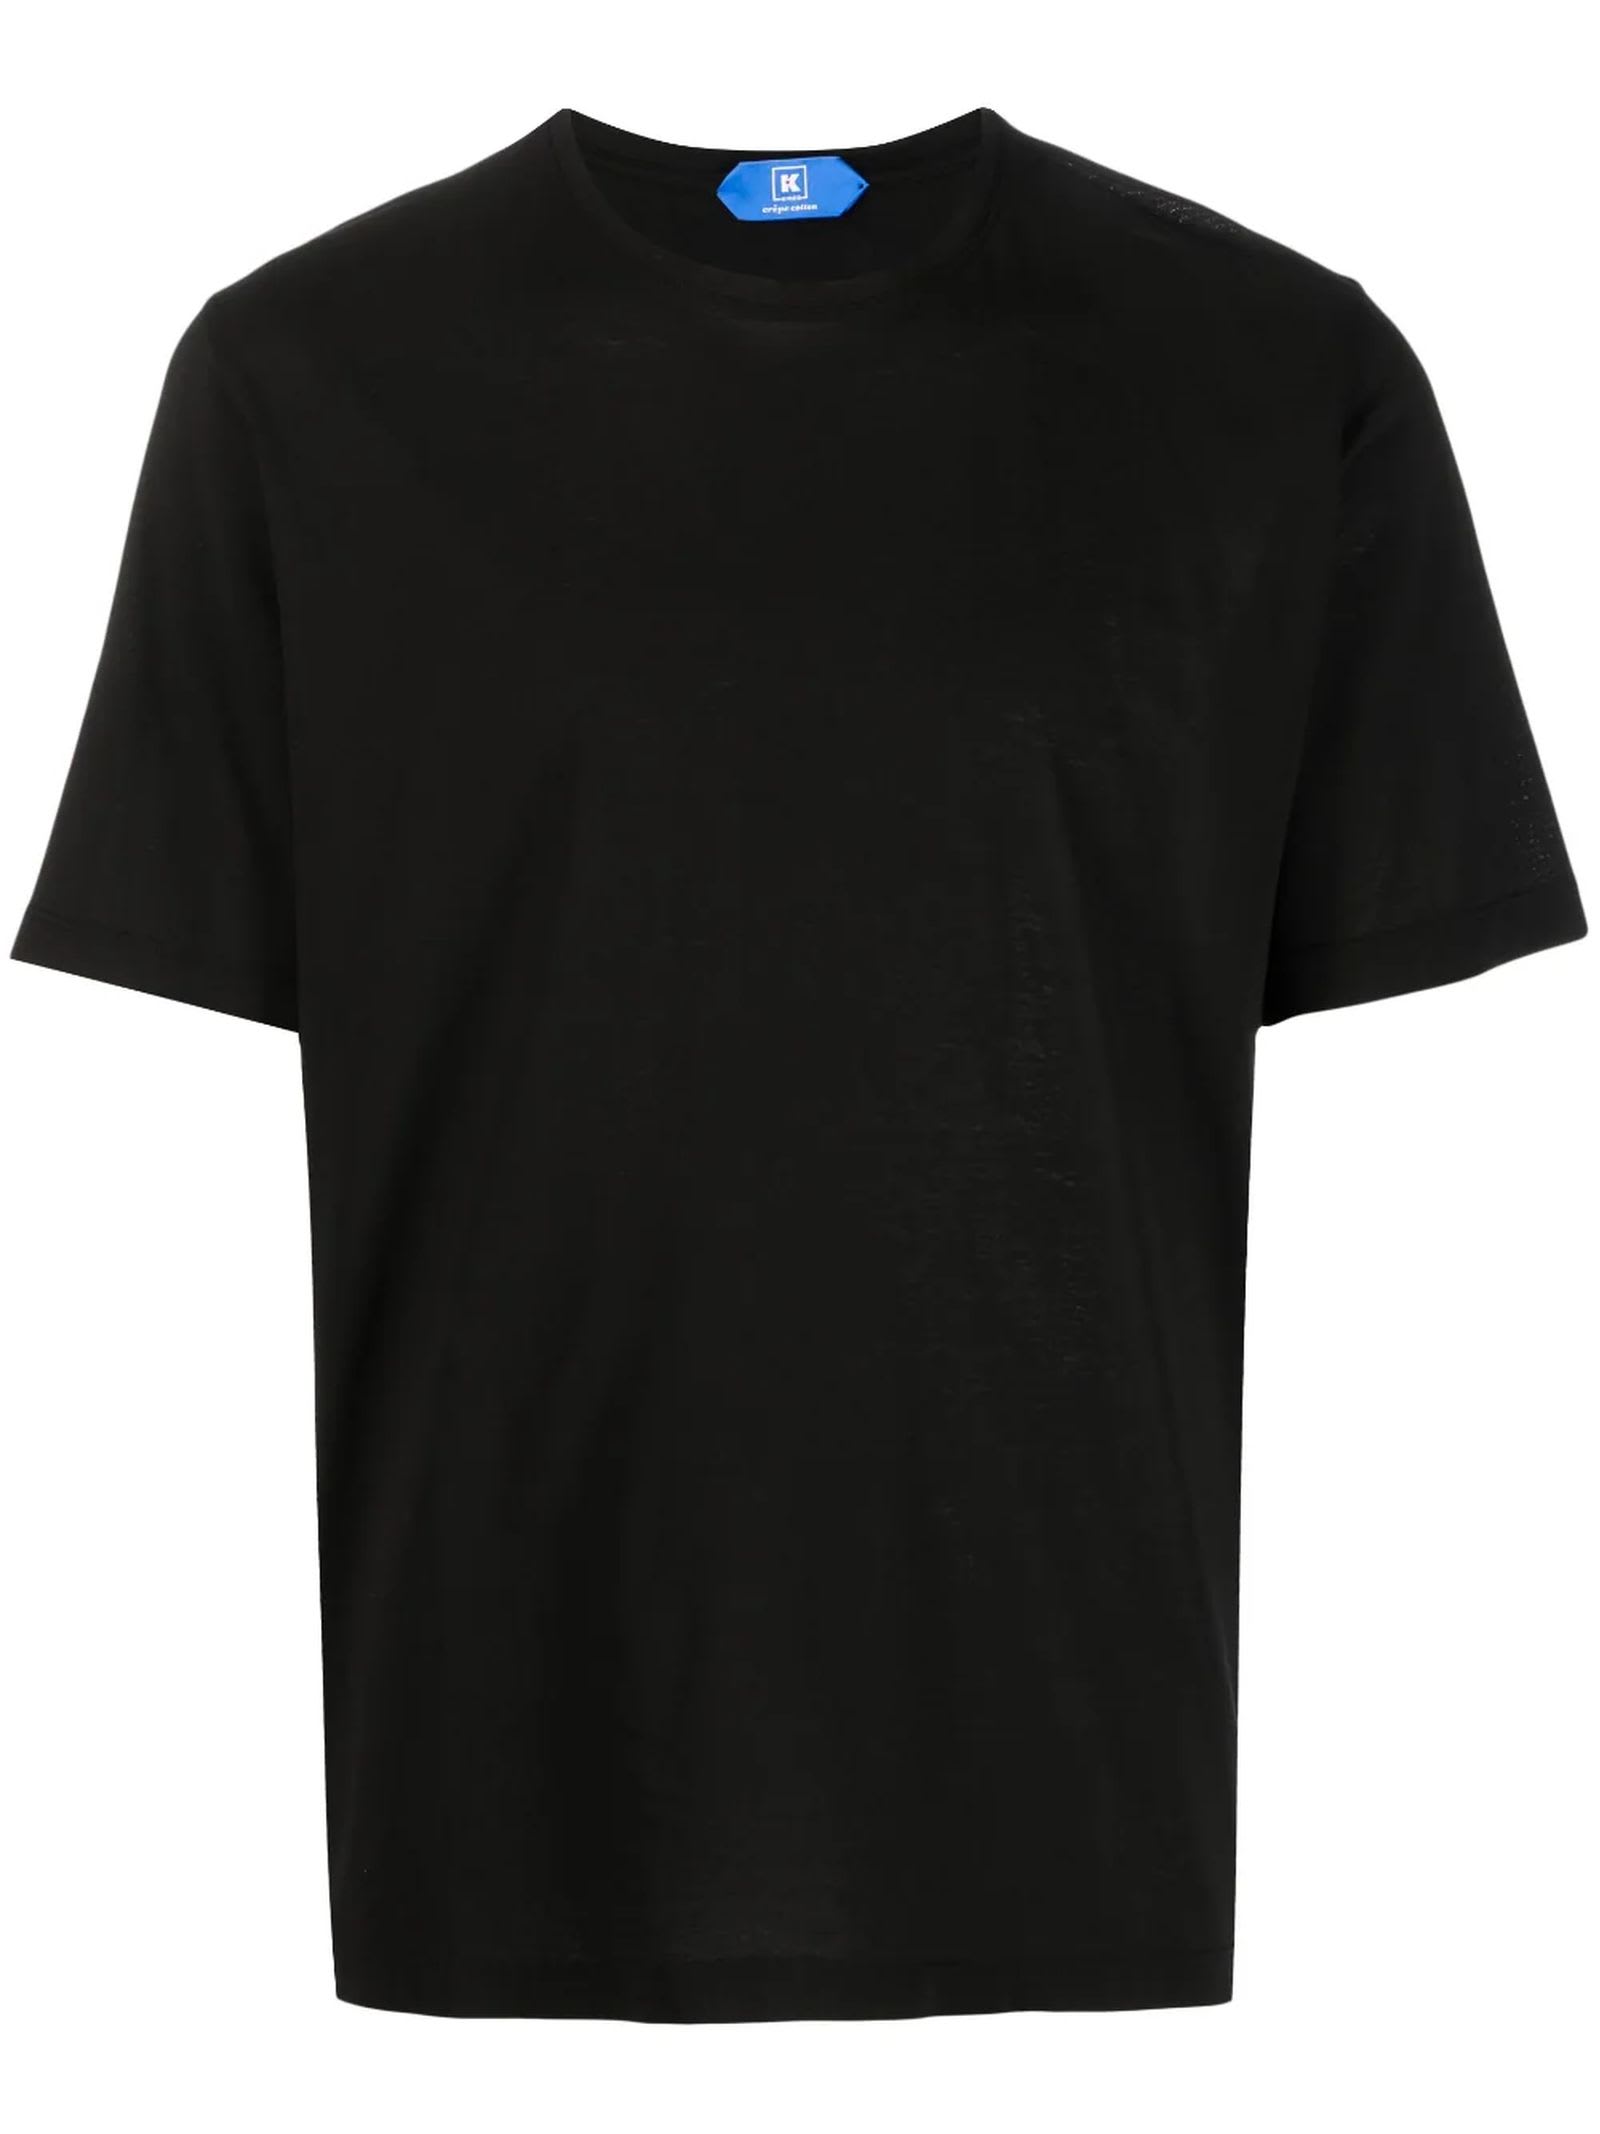 Black Jersey Cotton T-shirt